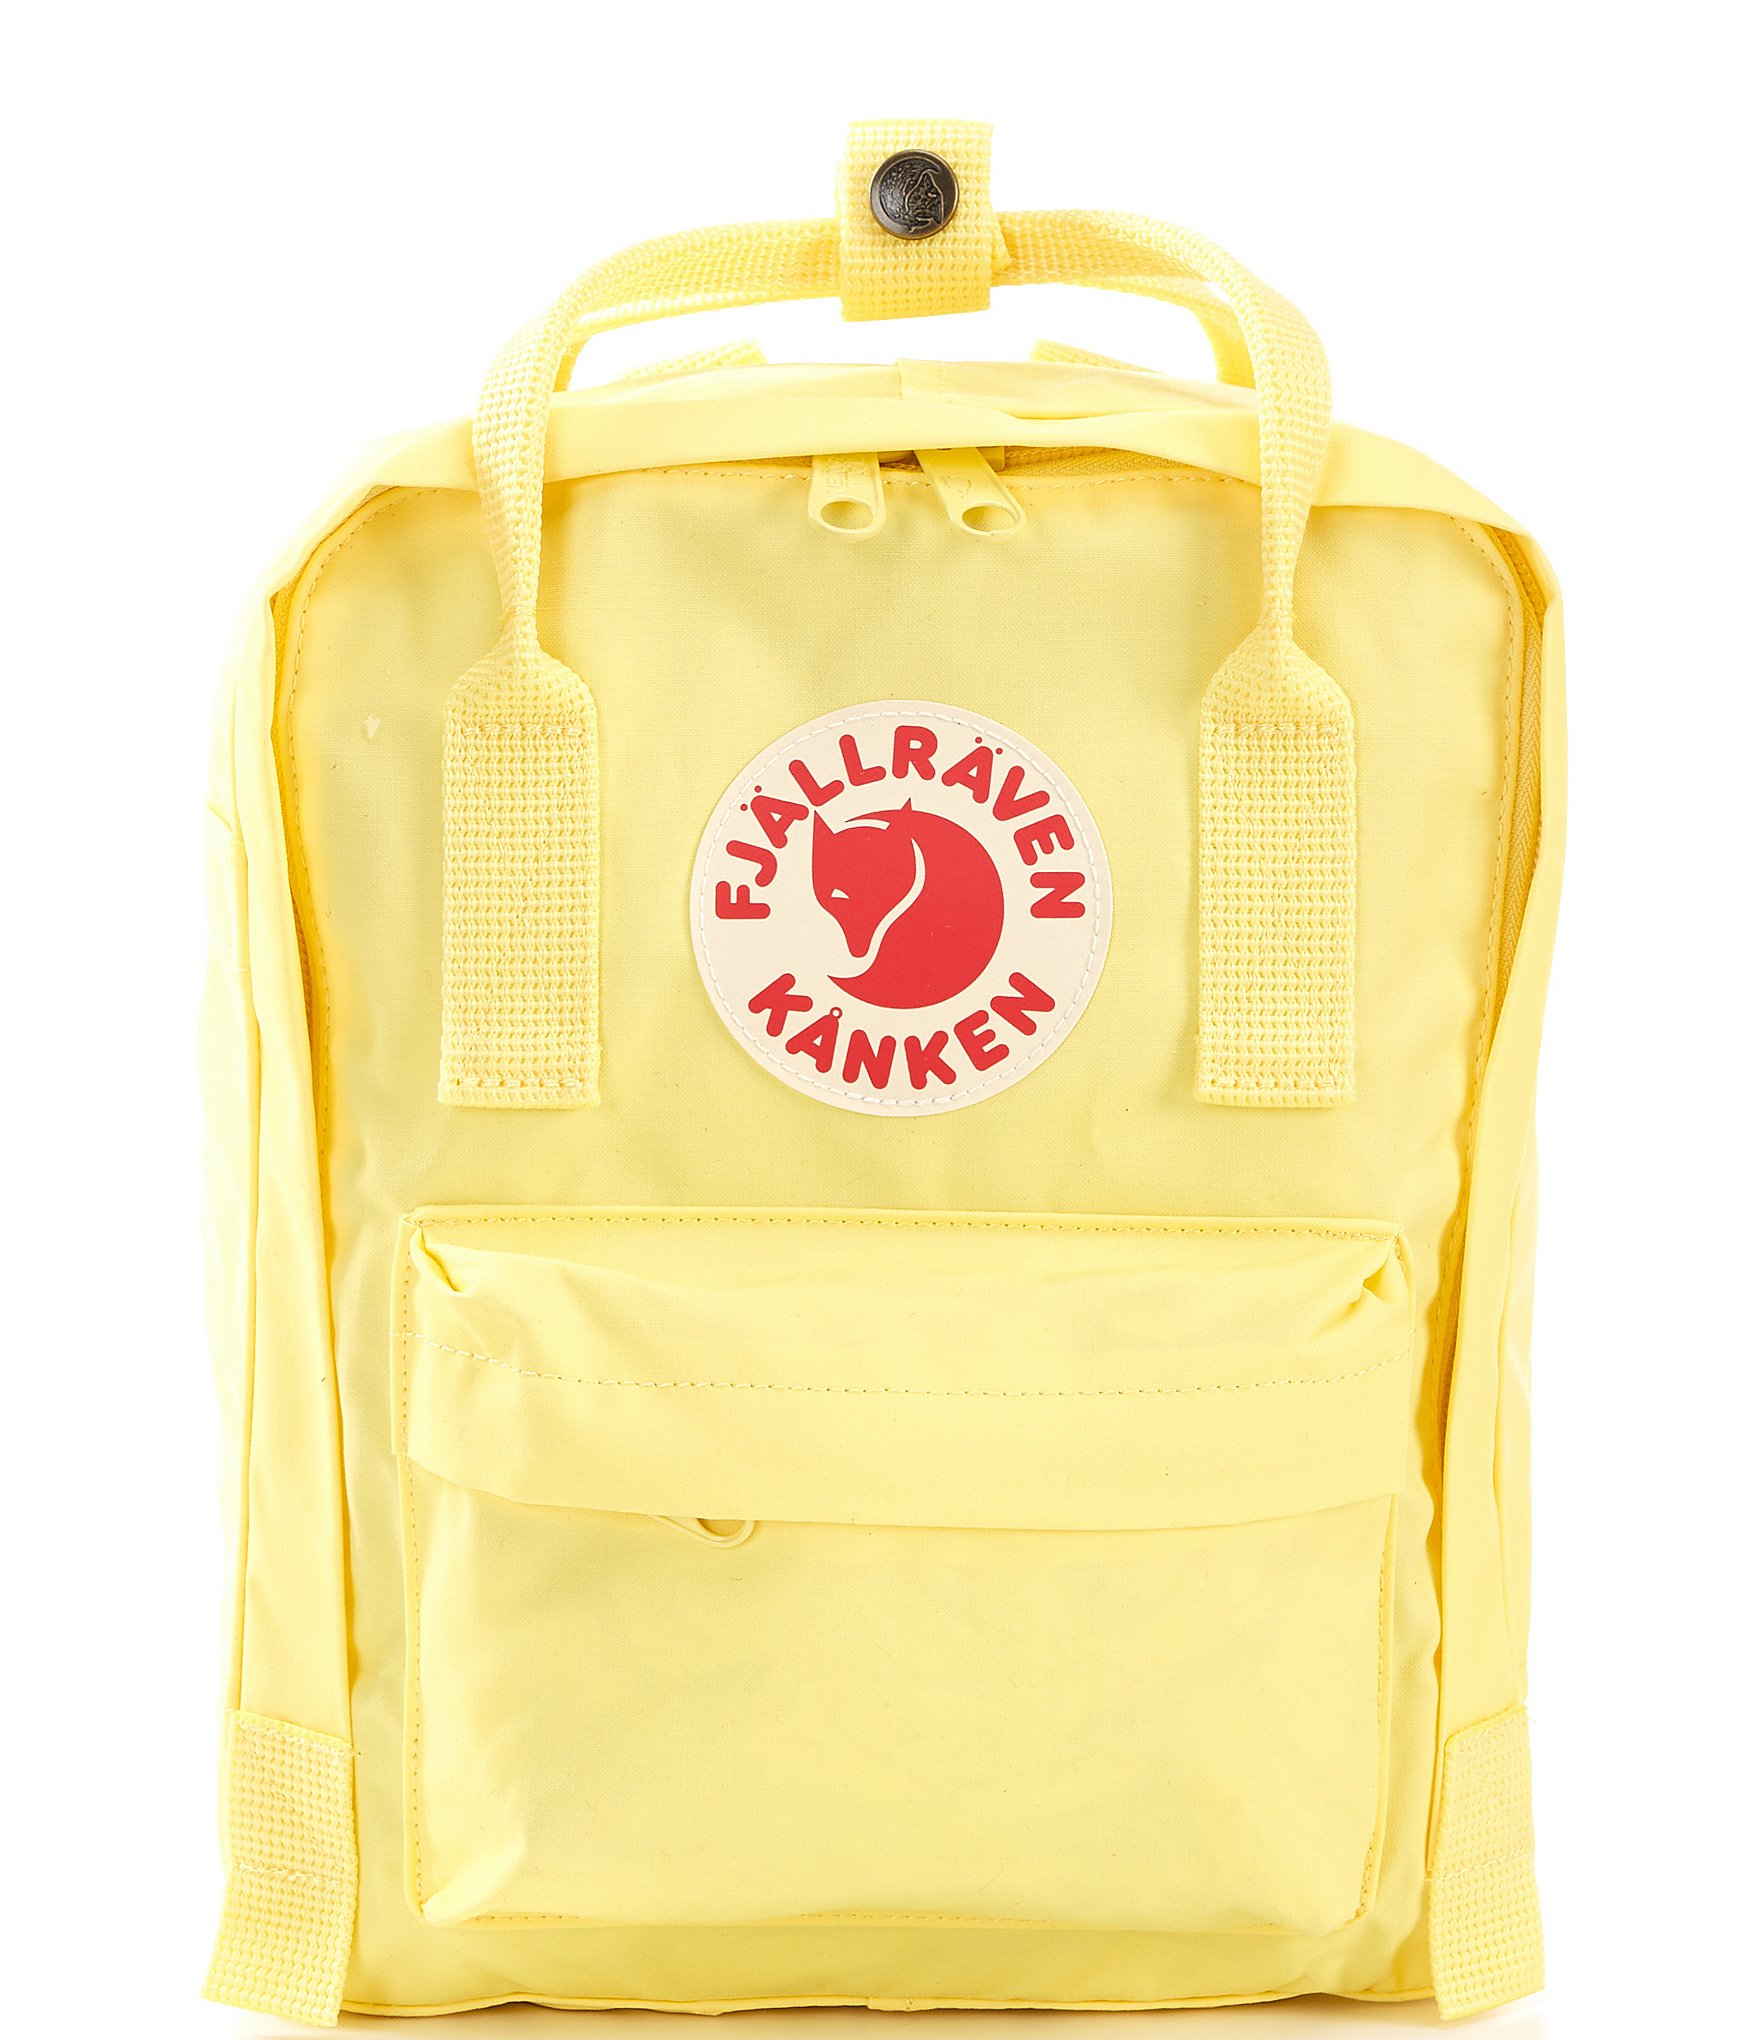 Maxbell Stylish Women Handbag Tote Durable Shoulder Bag for Travel Shopping  Vacation Light Yellow - Aladdin Shoppers at Rs 2485.00, New Delhi | ID:  2852161854230